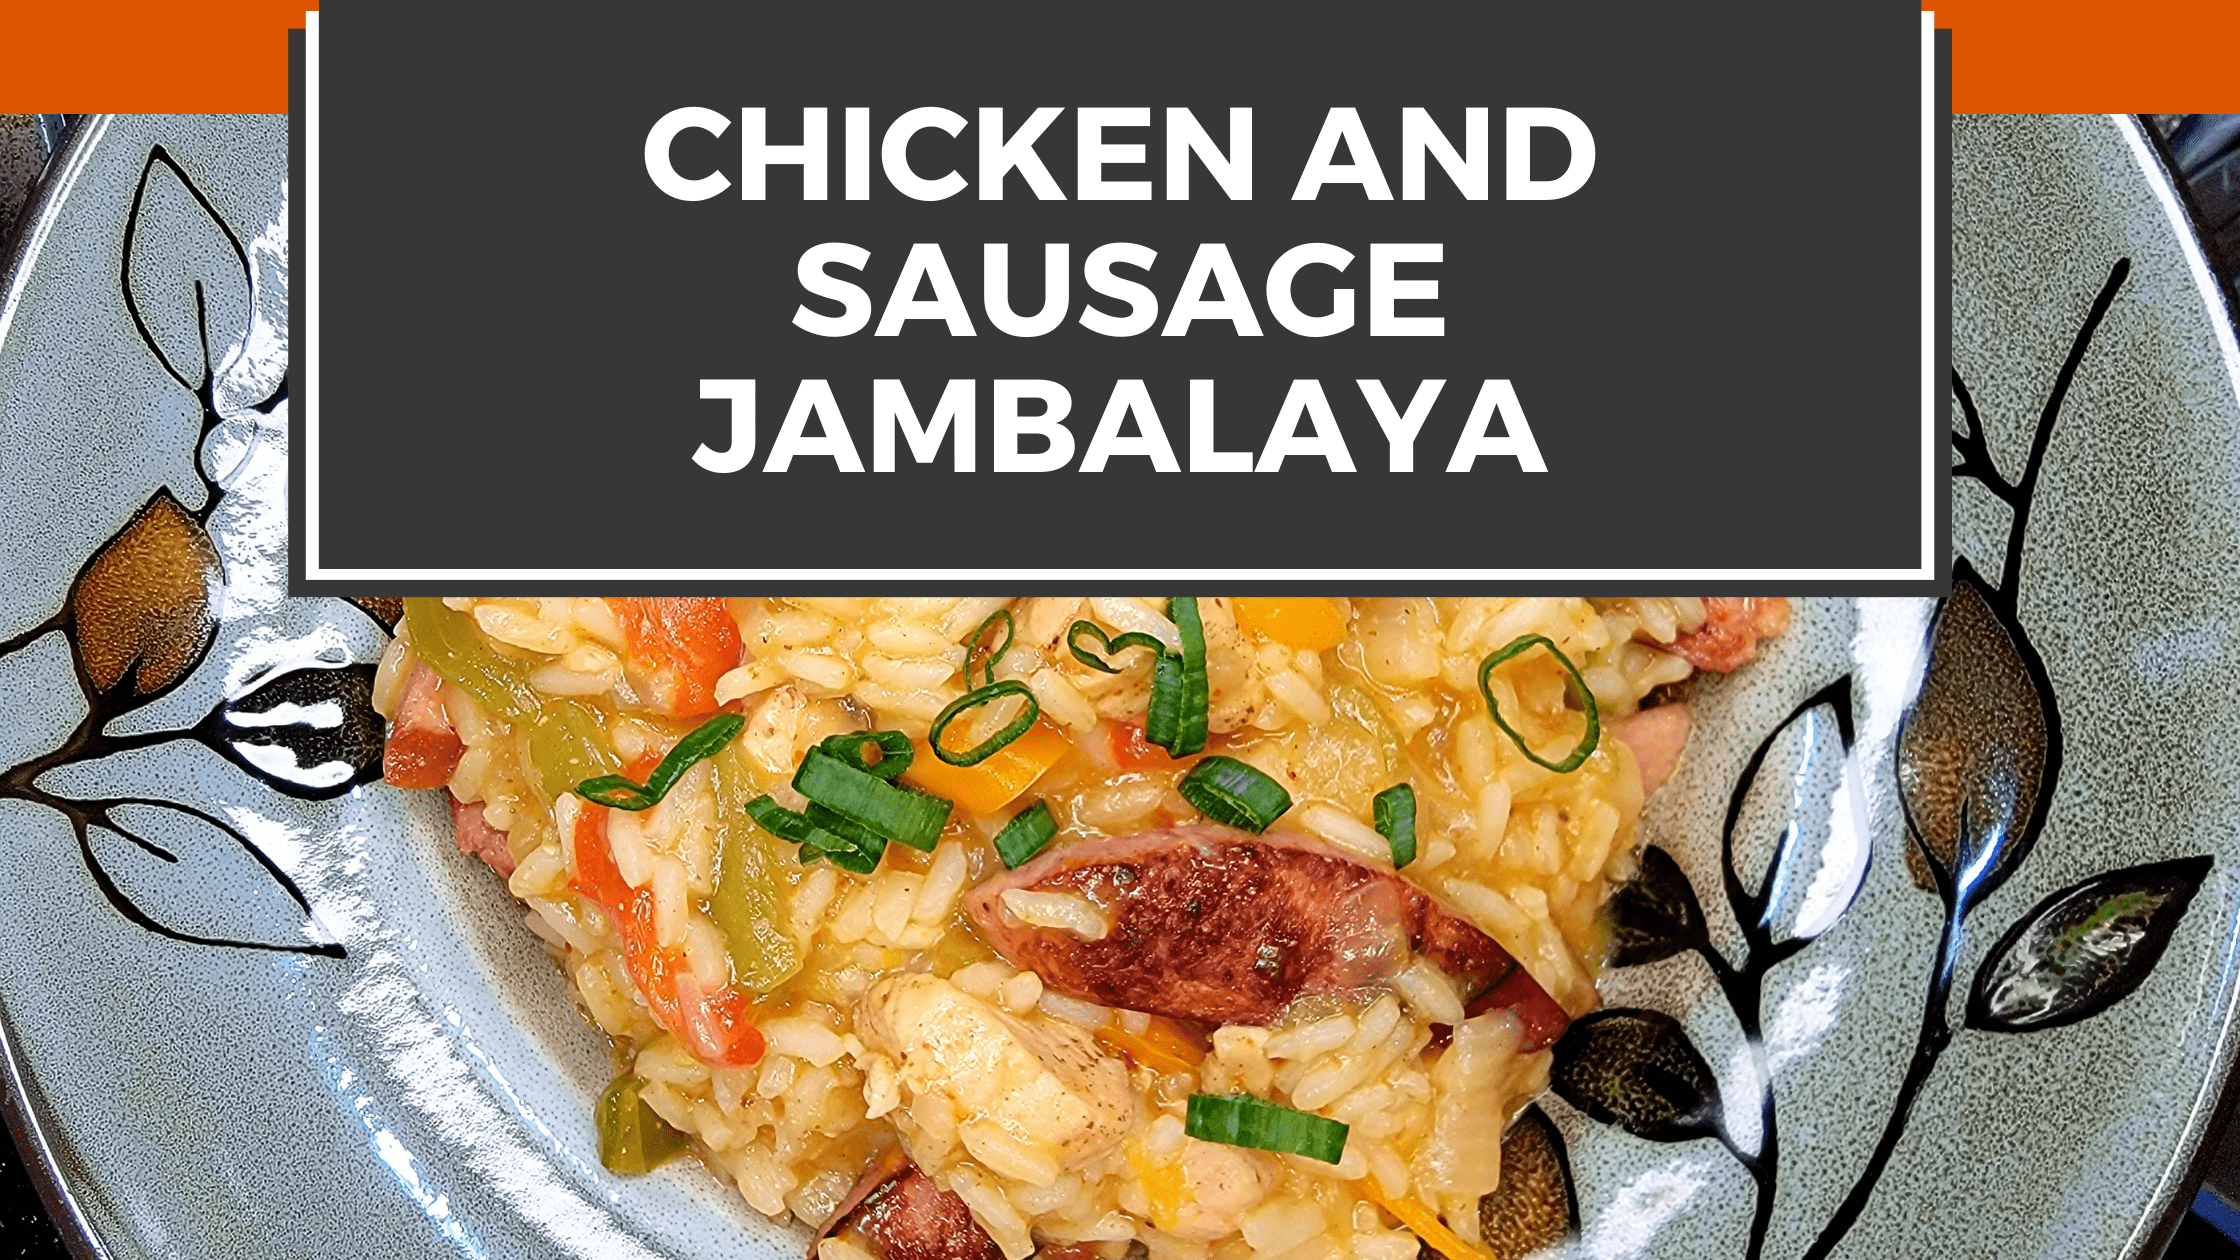 How to Make Chicken and Sausage Jambalaya - RFB Smokehouse